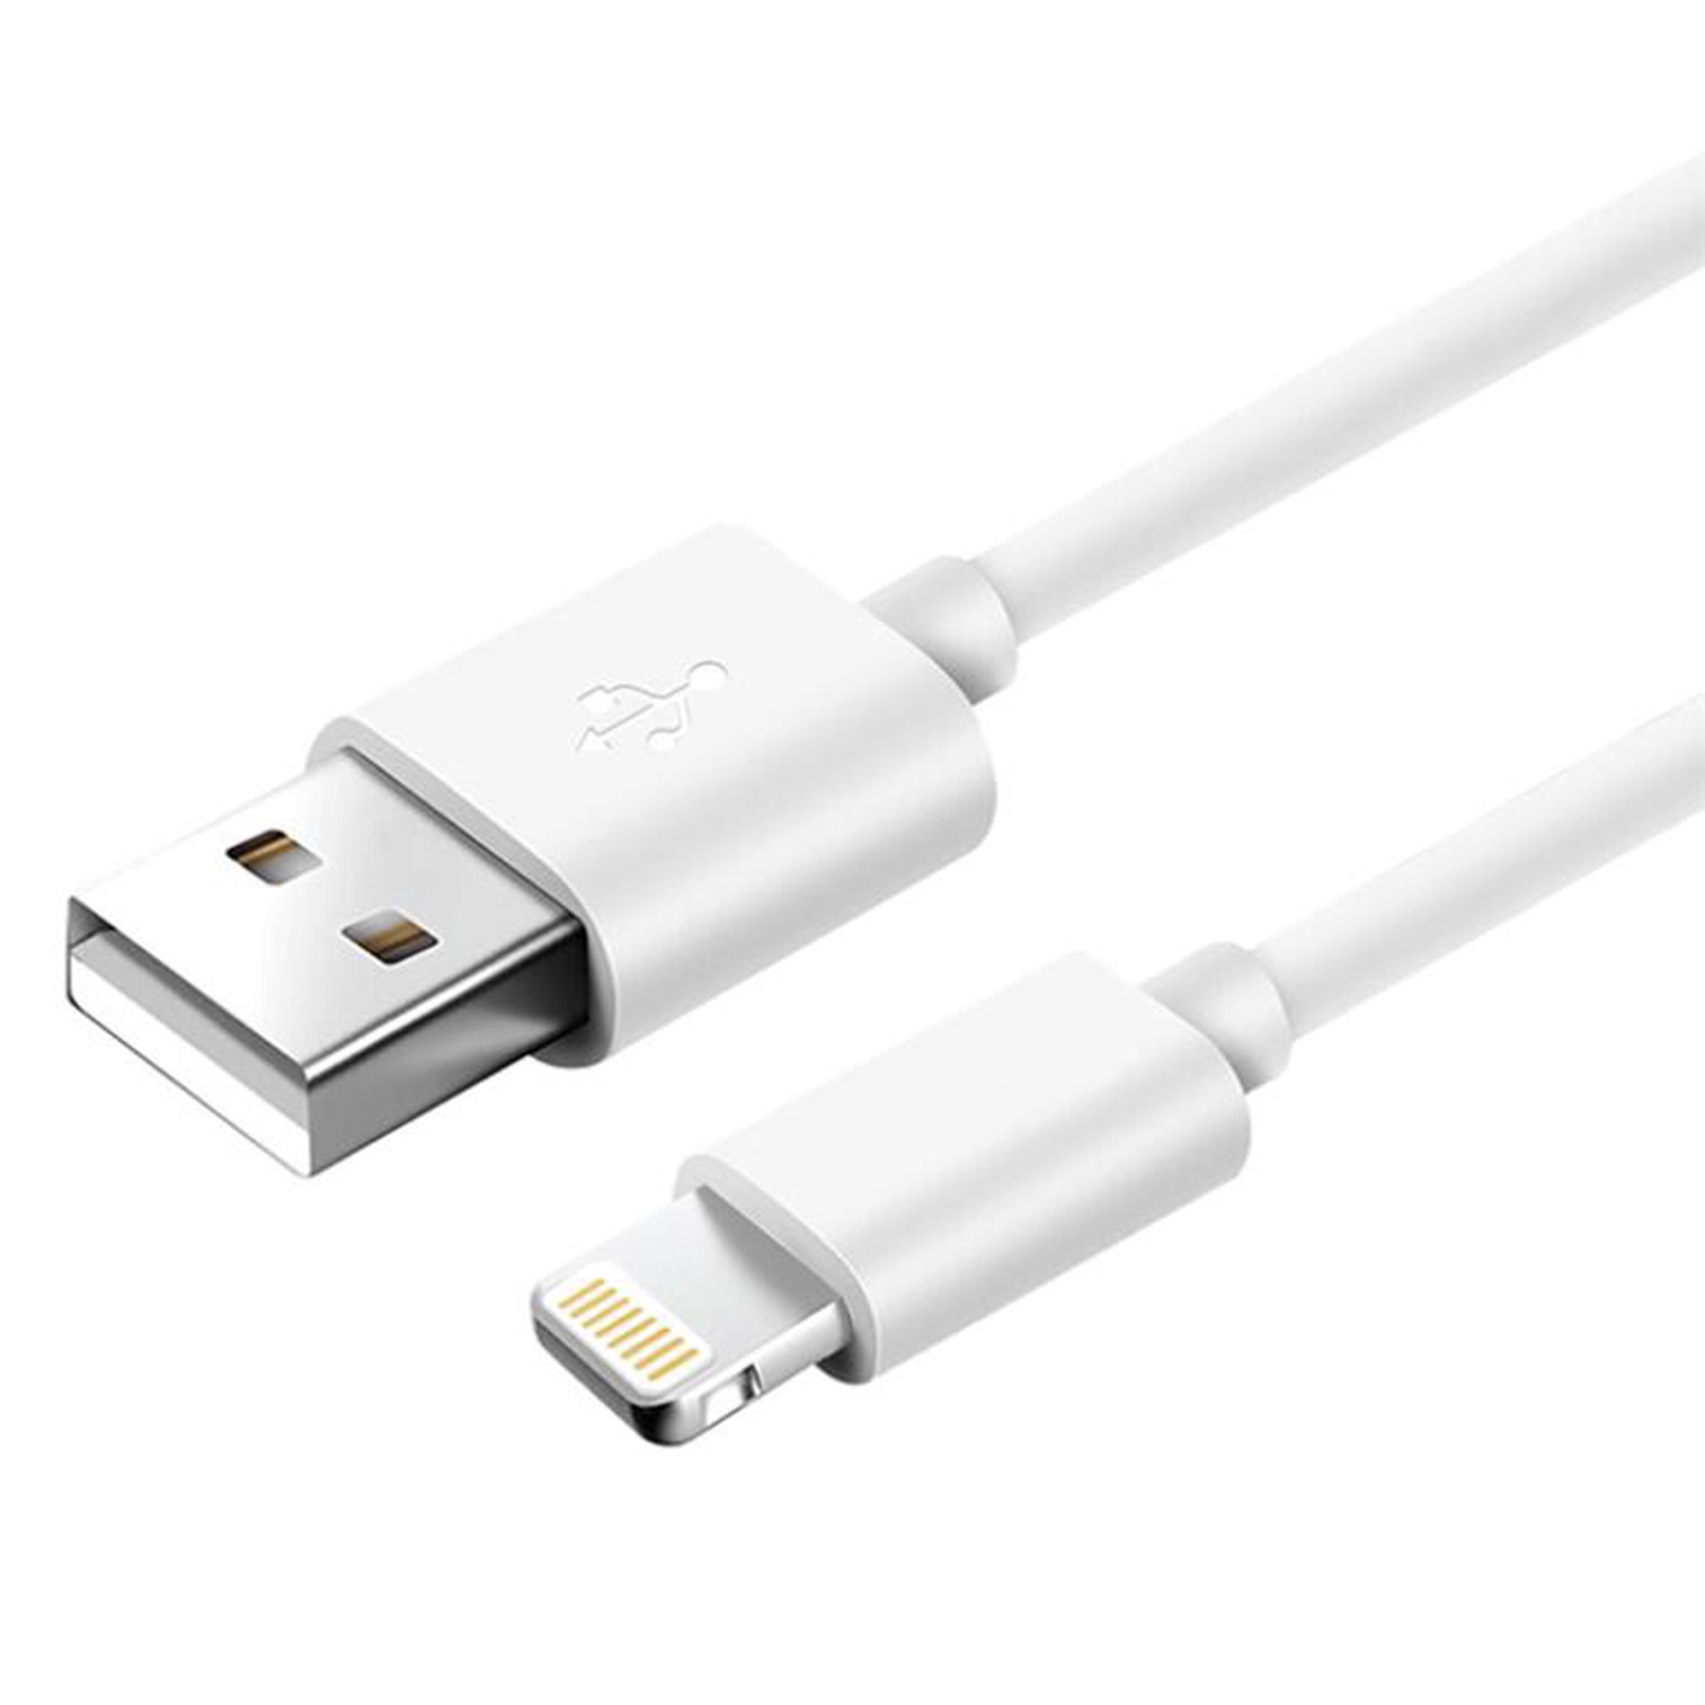 10x iPhone 7 Lightning auf USB Kabel 1m Ladekabel